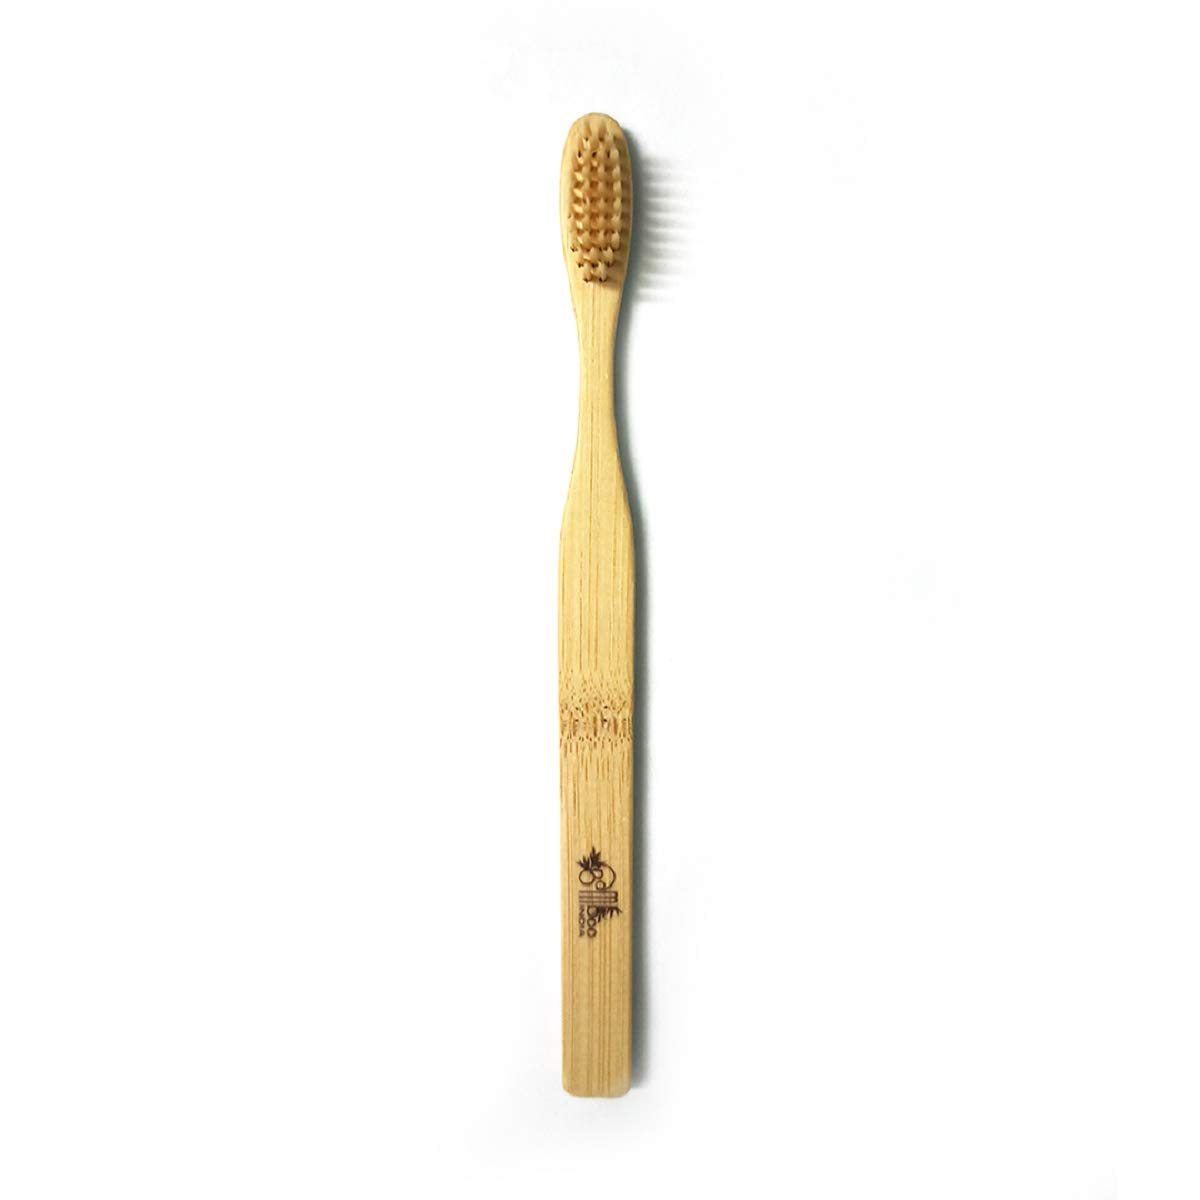 Bamboo India + tools + Bamboo Toothbrush Natural Kids + Pack of 1 + buy